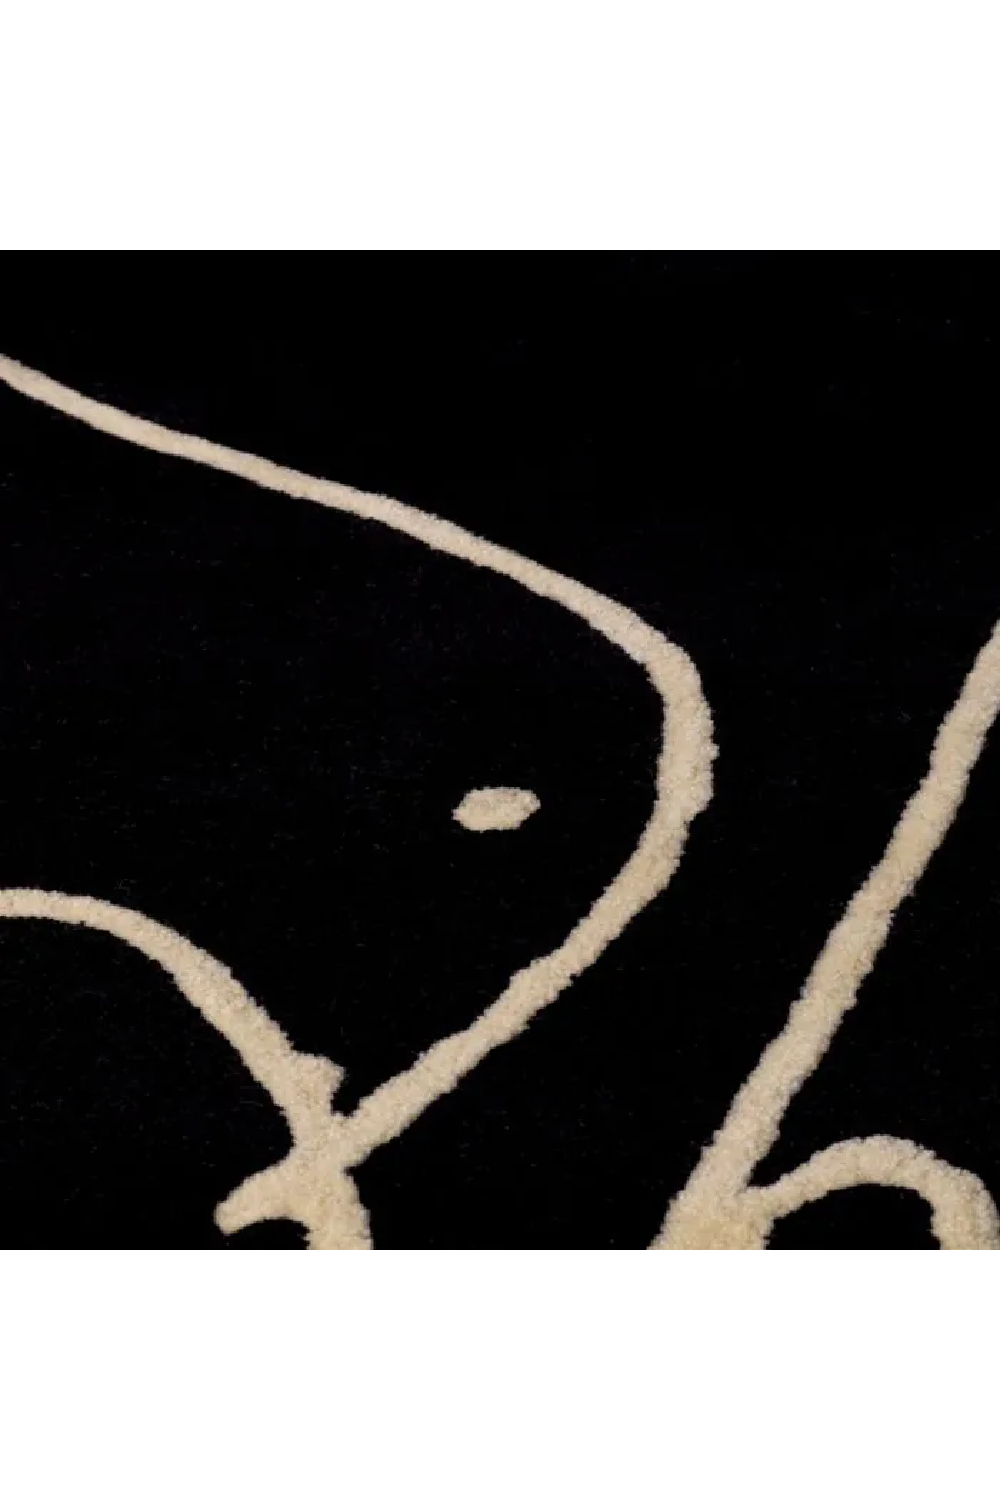 Black Wool Carpet 10' x 13' | Eichholtz Piccione | Oroa.com